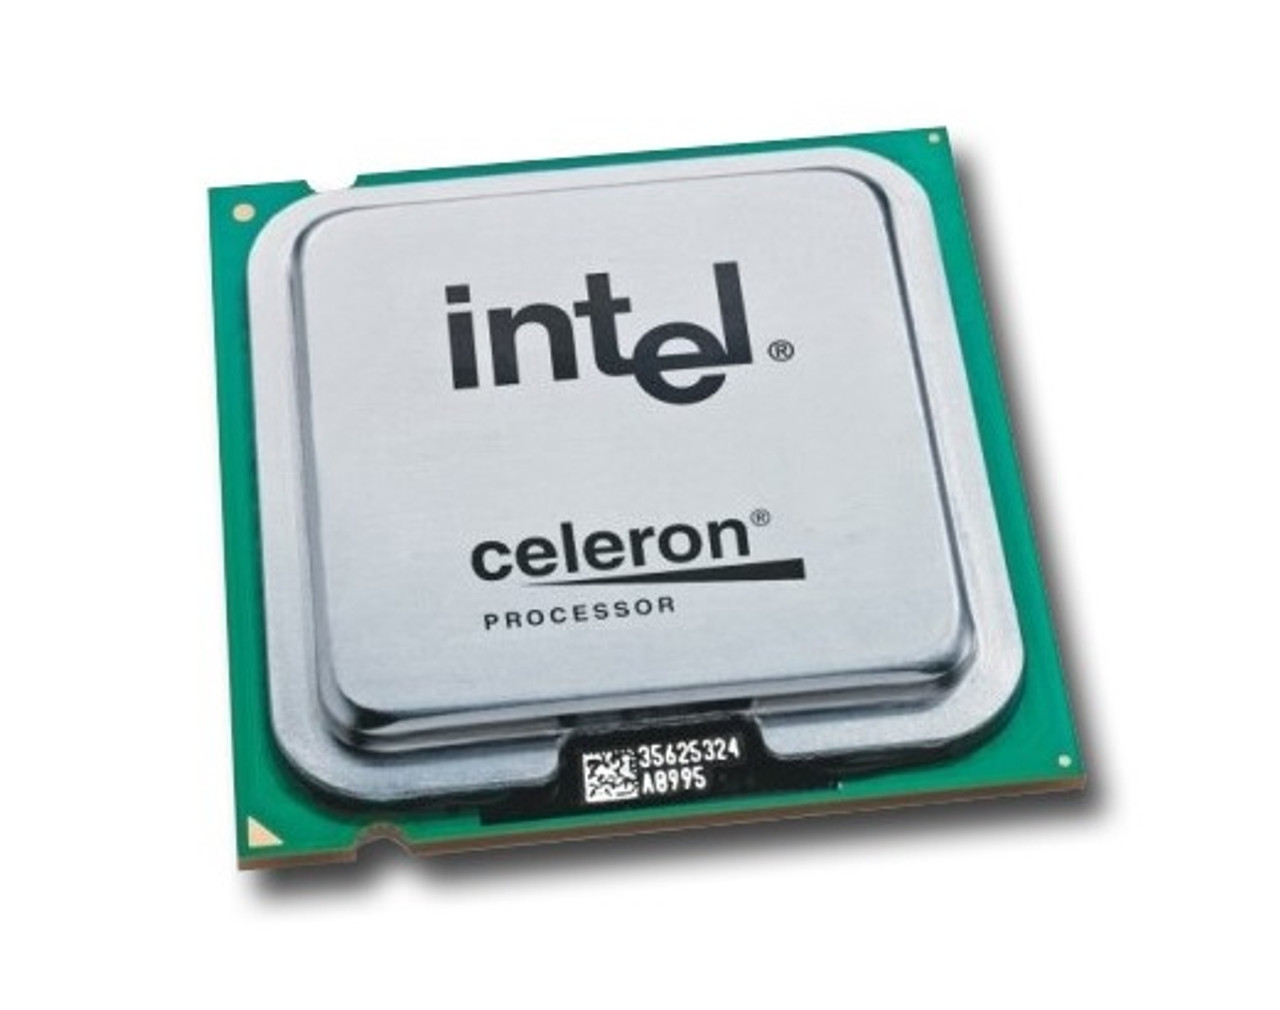 SL3KA - Intel Celeron 433MHz 66MHz FSB 128KB L2 Cache Socket BGA615 Mobile Processor